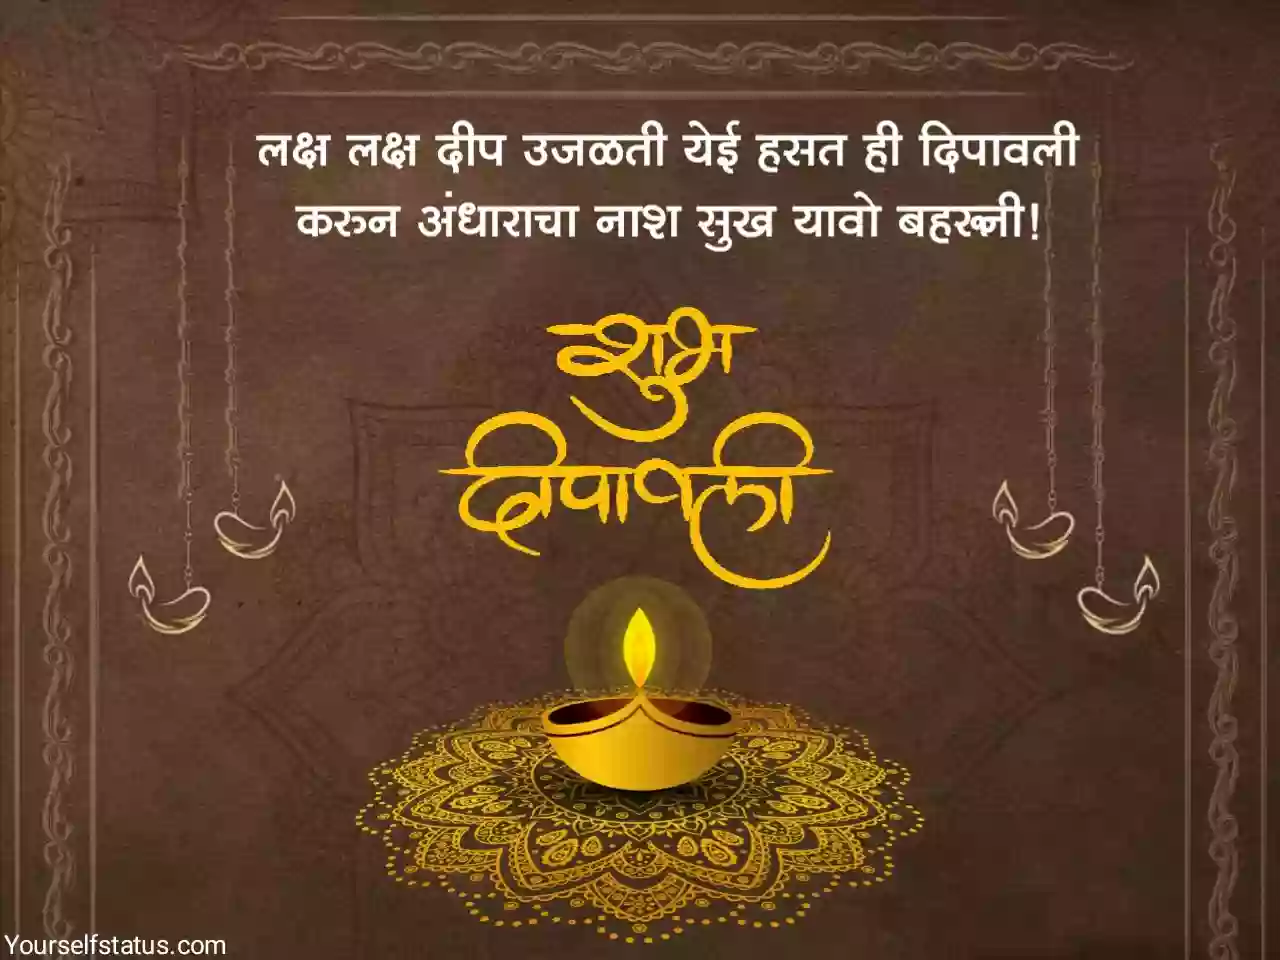 Happy Diwali wishes in marathi images